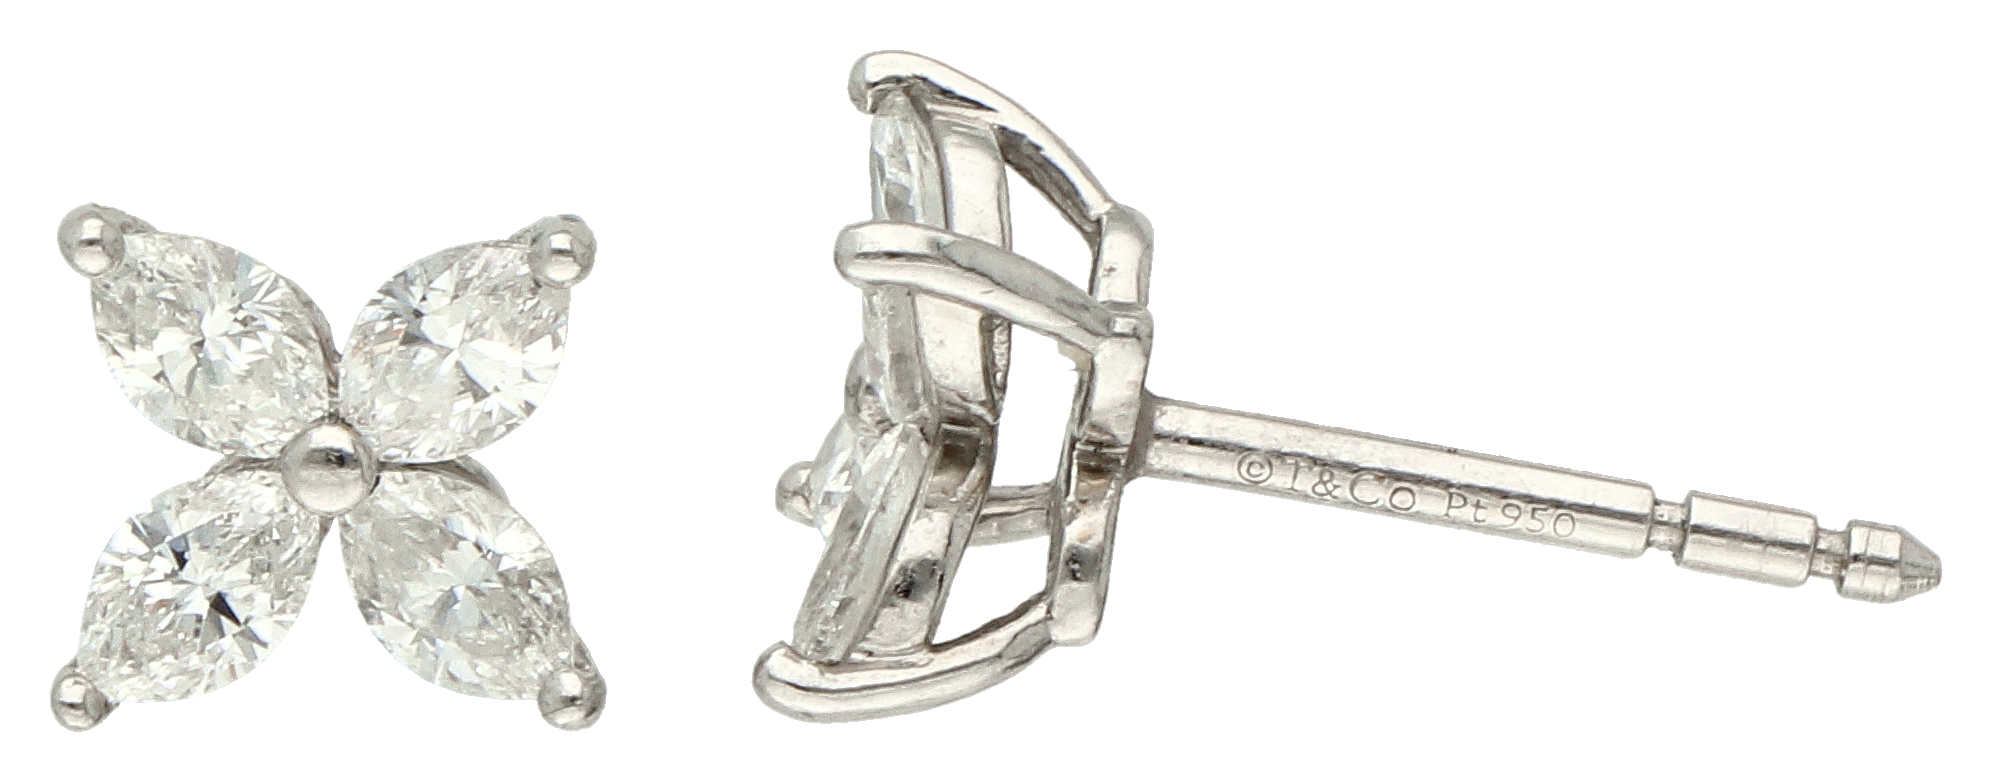 No Reserve - Tiffany & Co. platinum 'Victoria' ear studs set with 0.38 ct. diamond. - Image 3 of 5